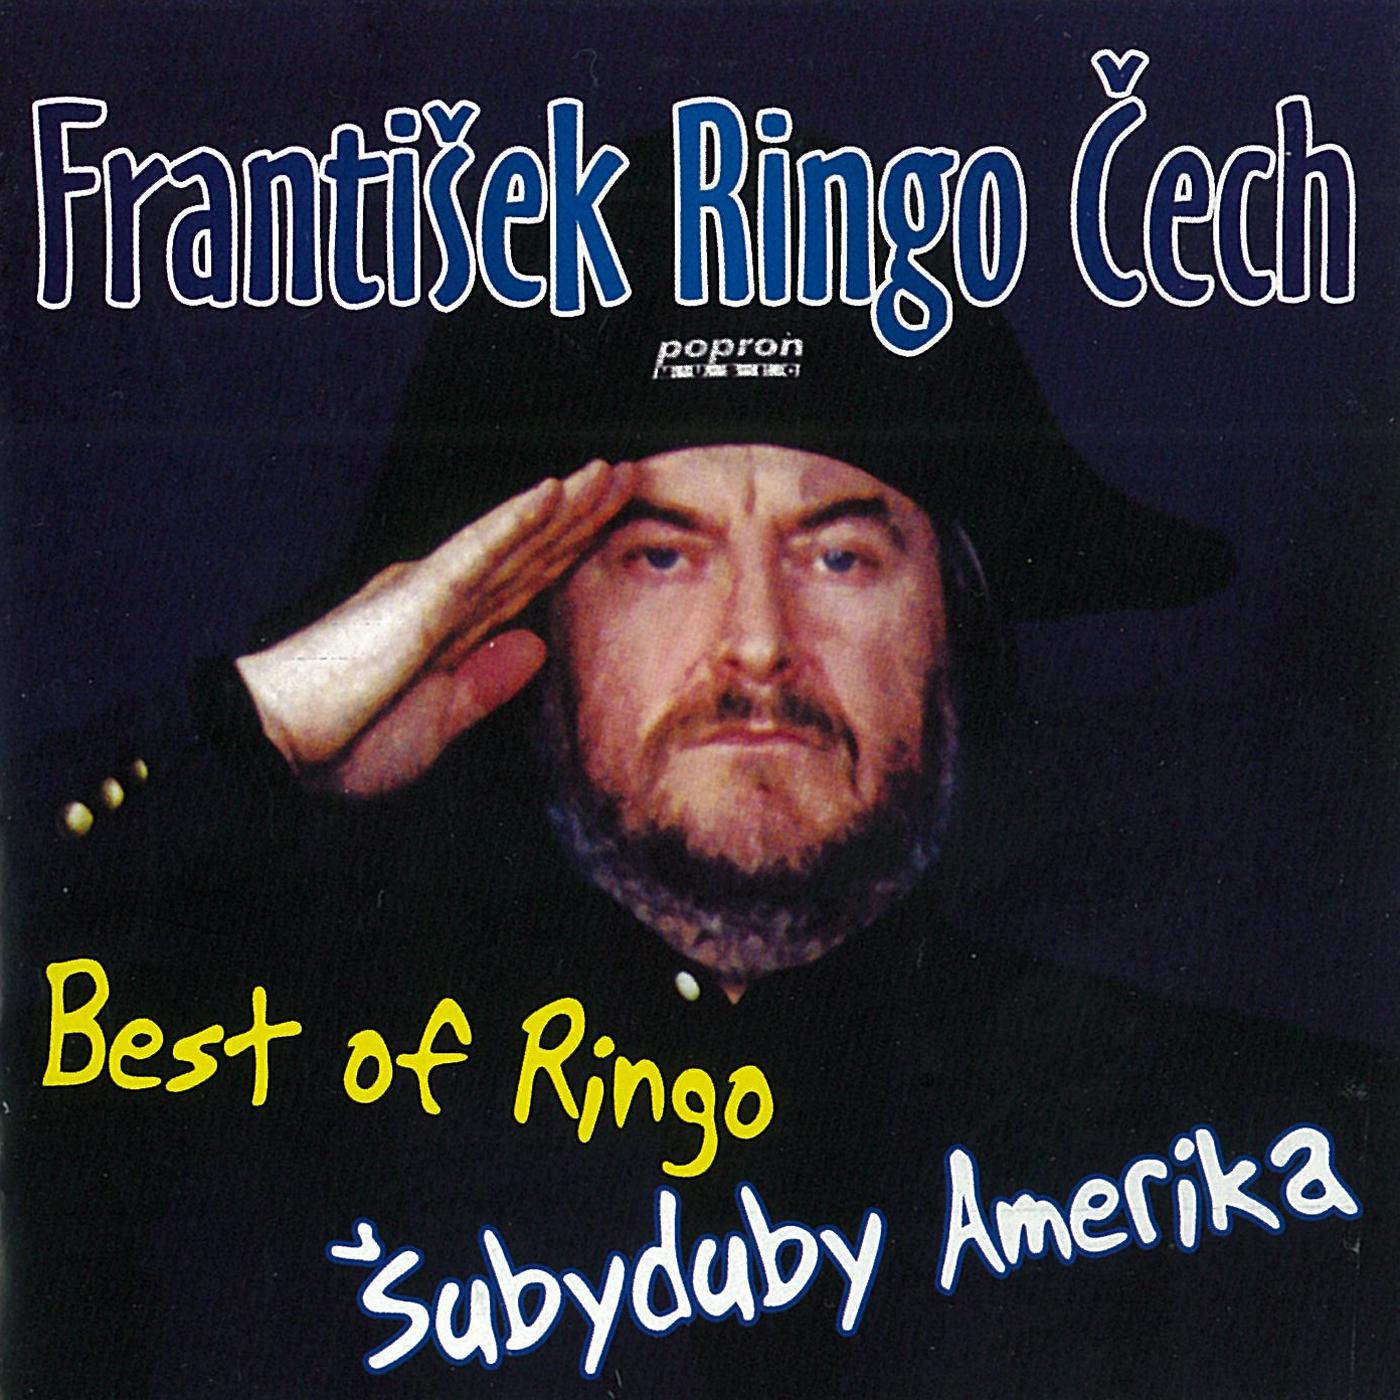 CD Shop - CECH, FRANTISEK RINGO BEST OF RINGO - SUBYDUBY AMERIKA